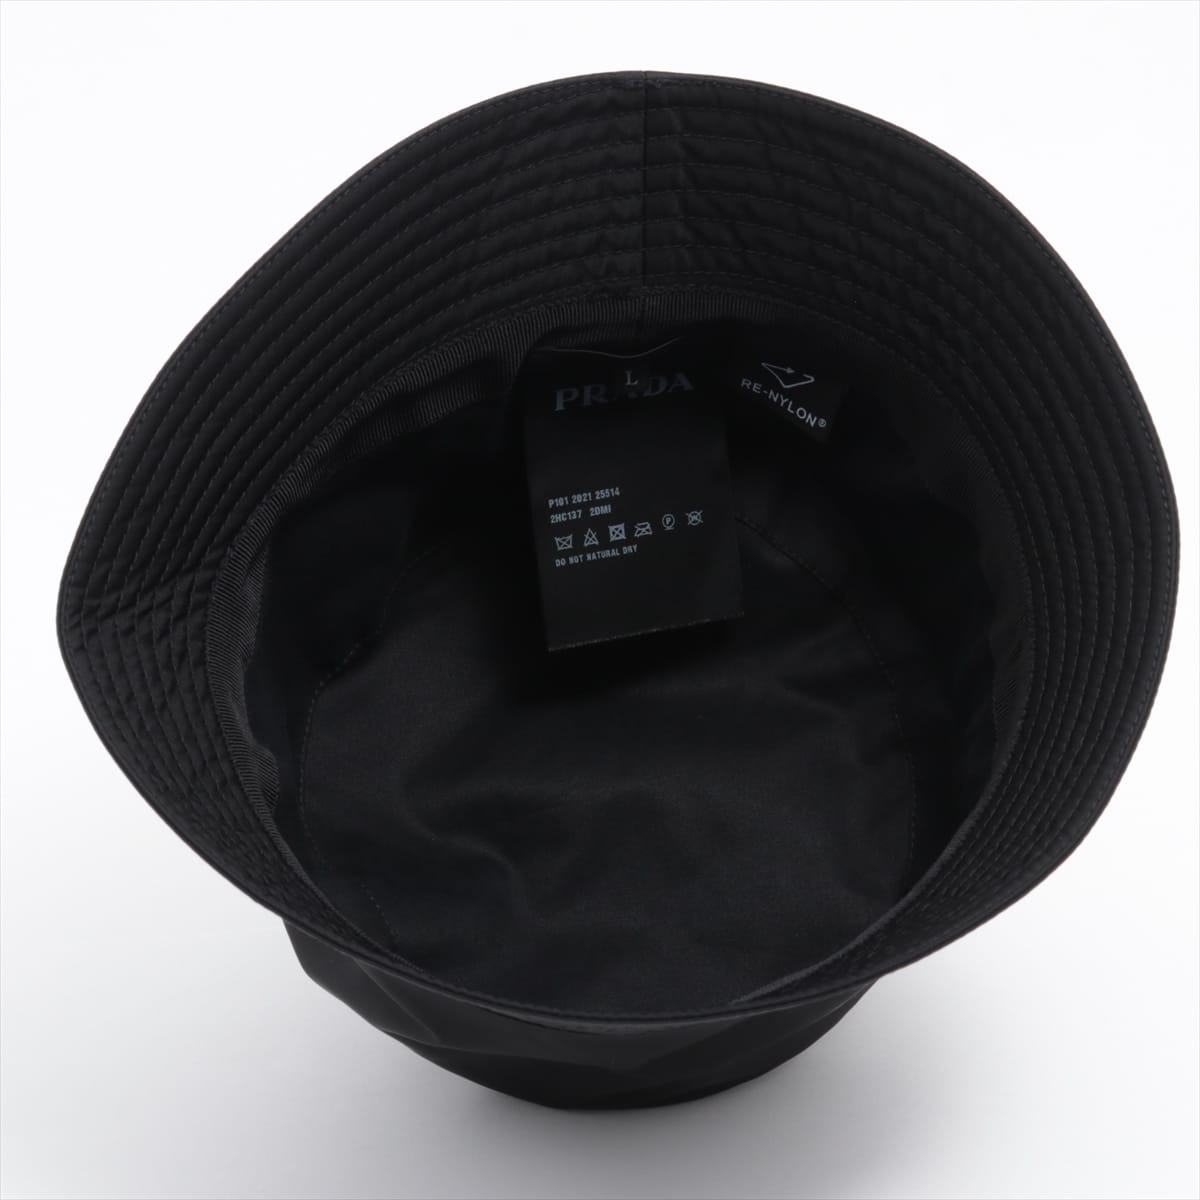 Prada 2HC137 Tessuto Hat L Nylon Black